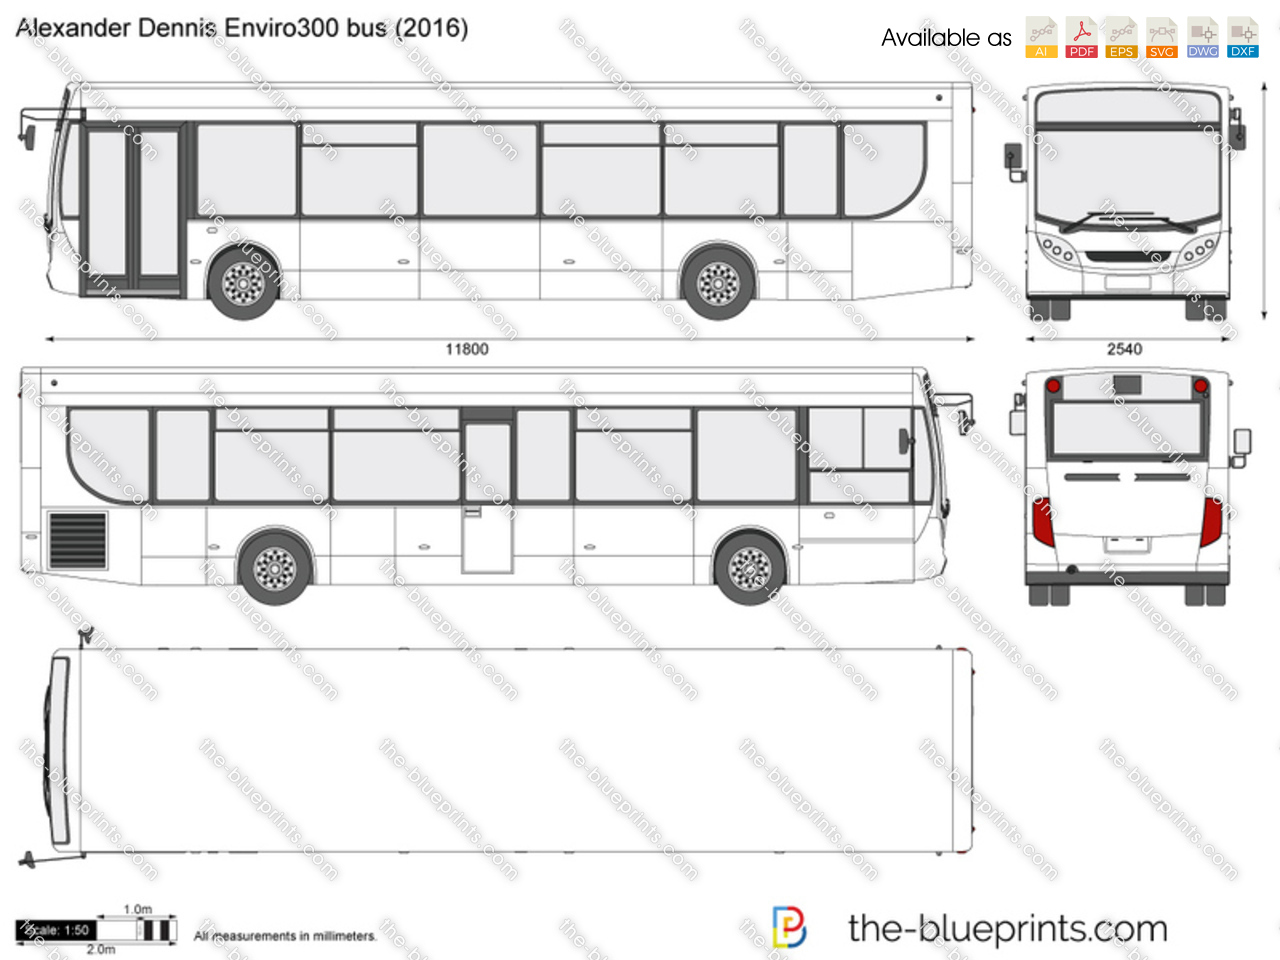 Alexander Dennis Enviro300 bus